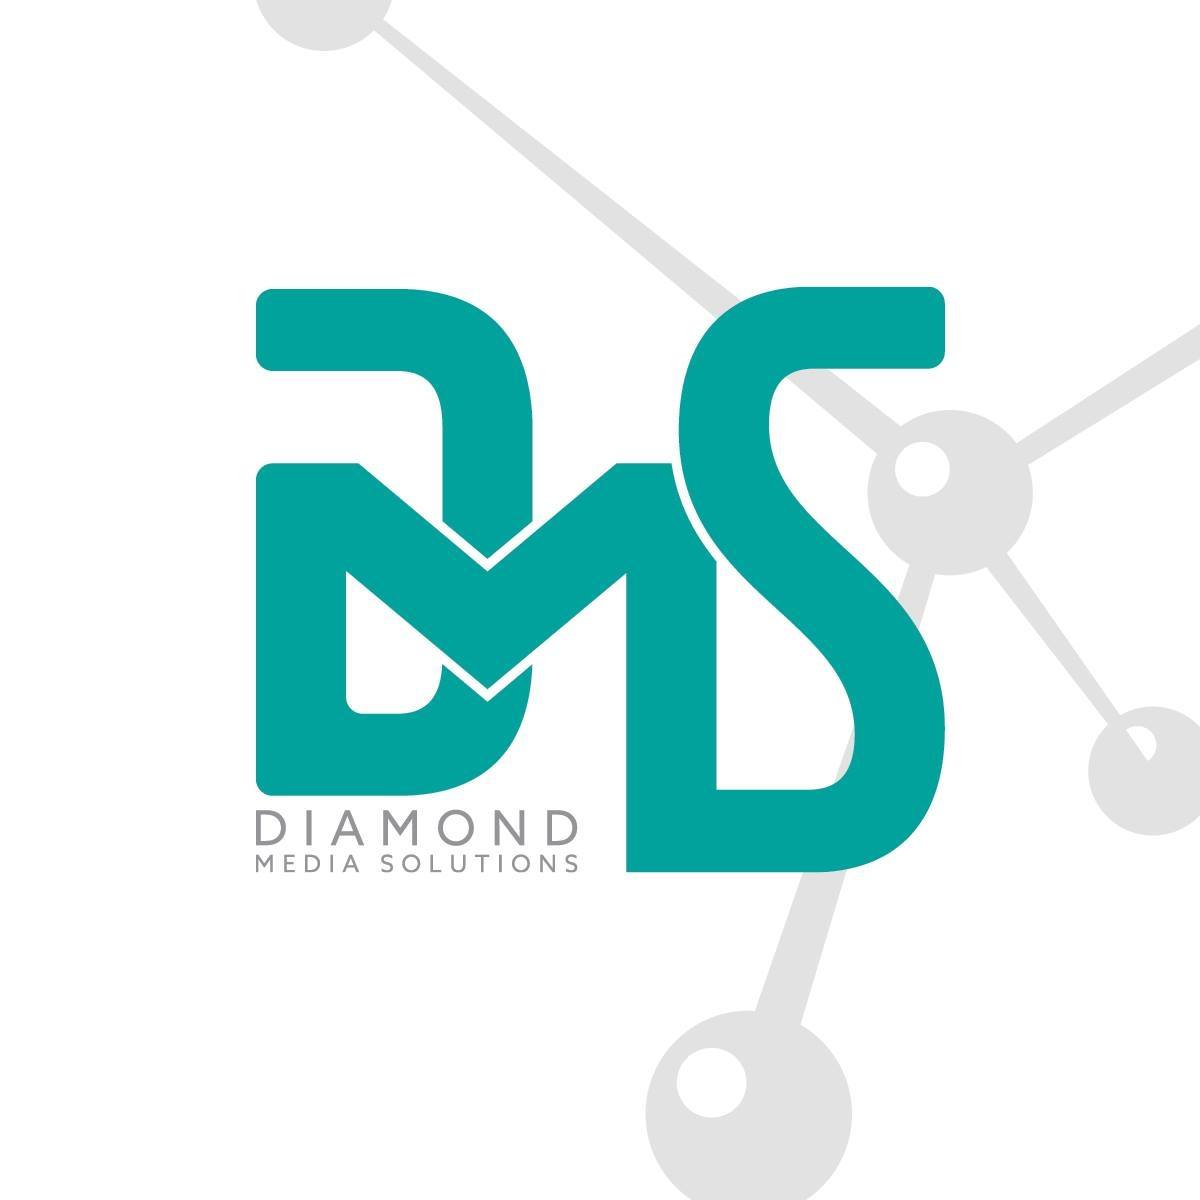 Diamond Media Solutions